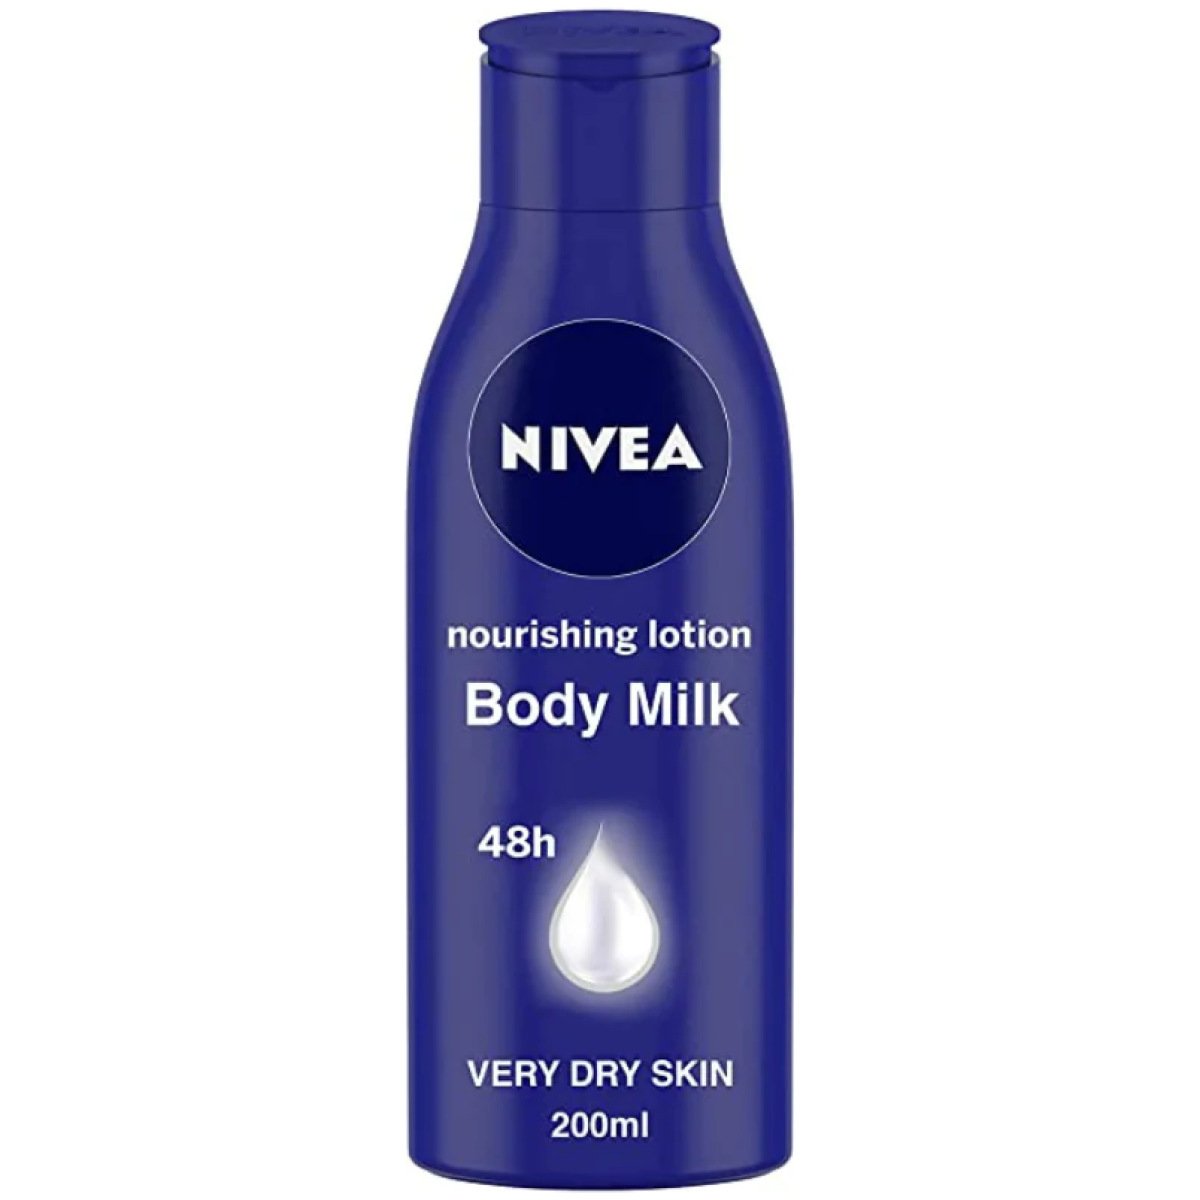 Nivea Nourishing Body Milk 48H Body Lotion For Very Dry Skin 200Ml